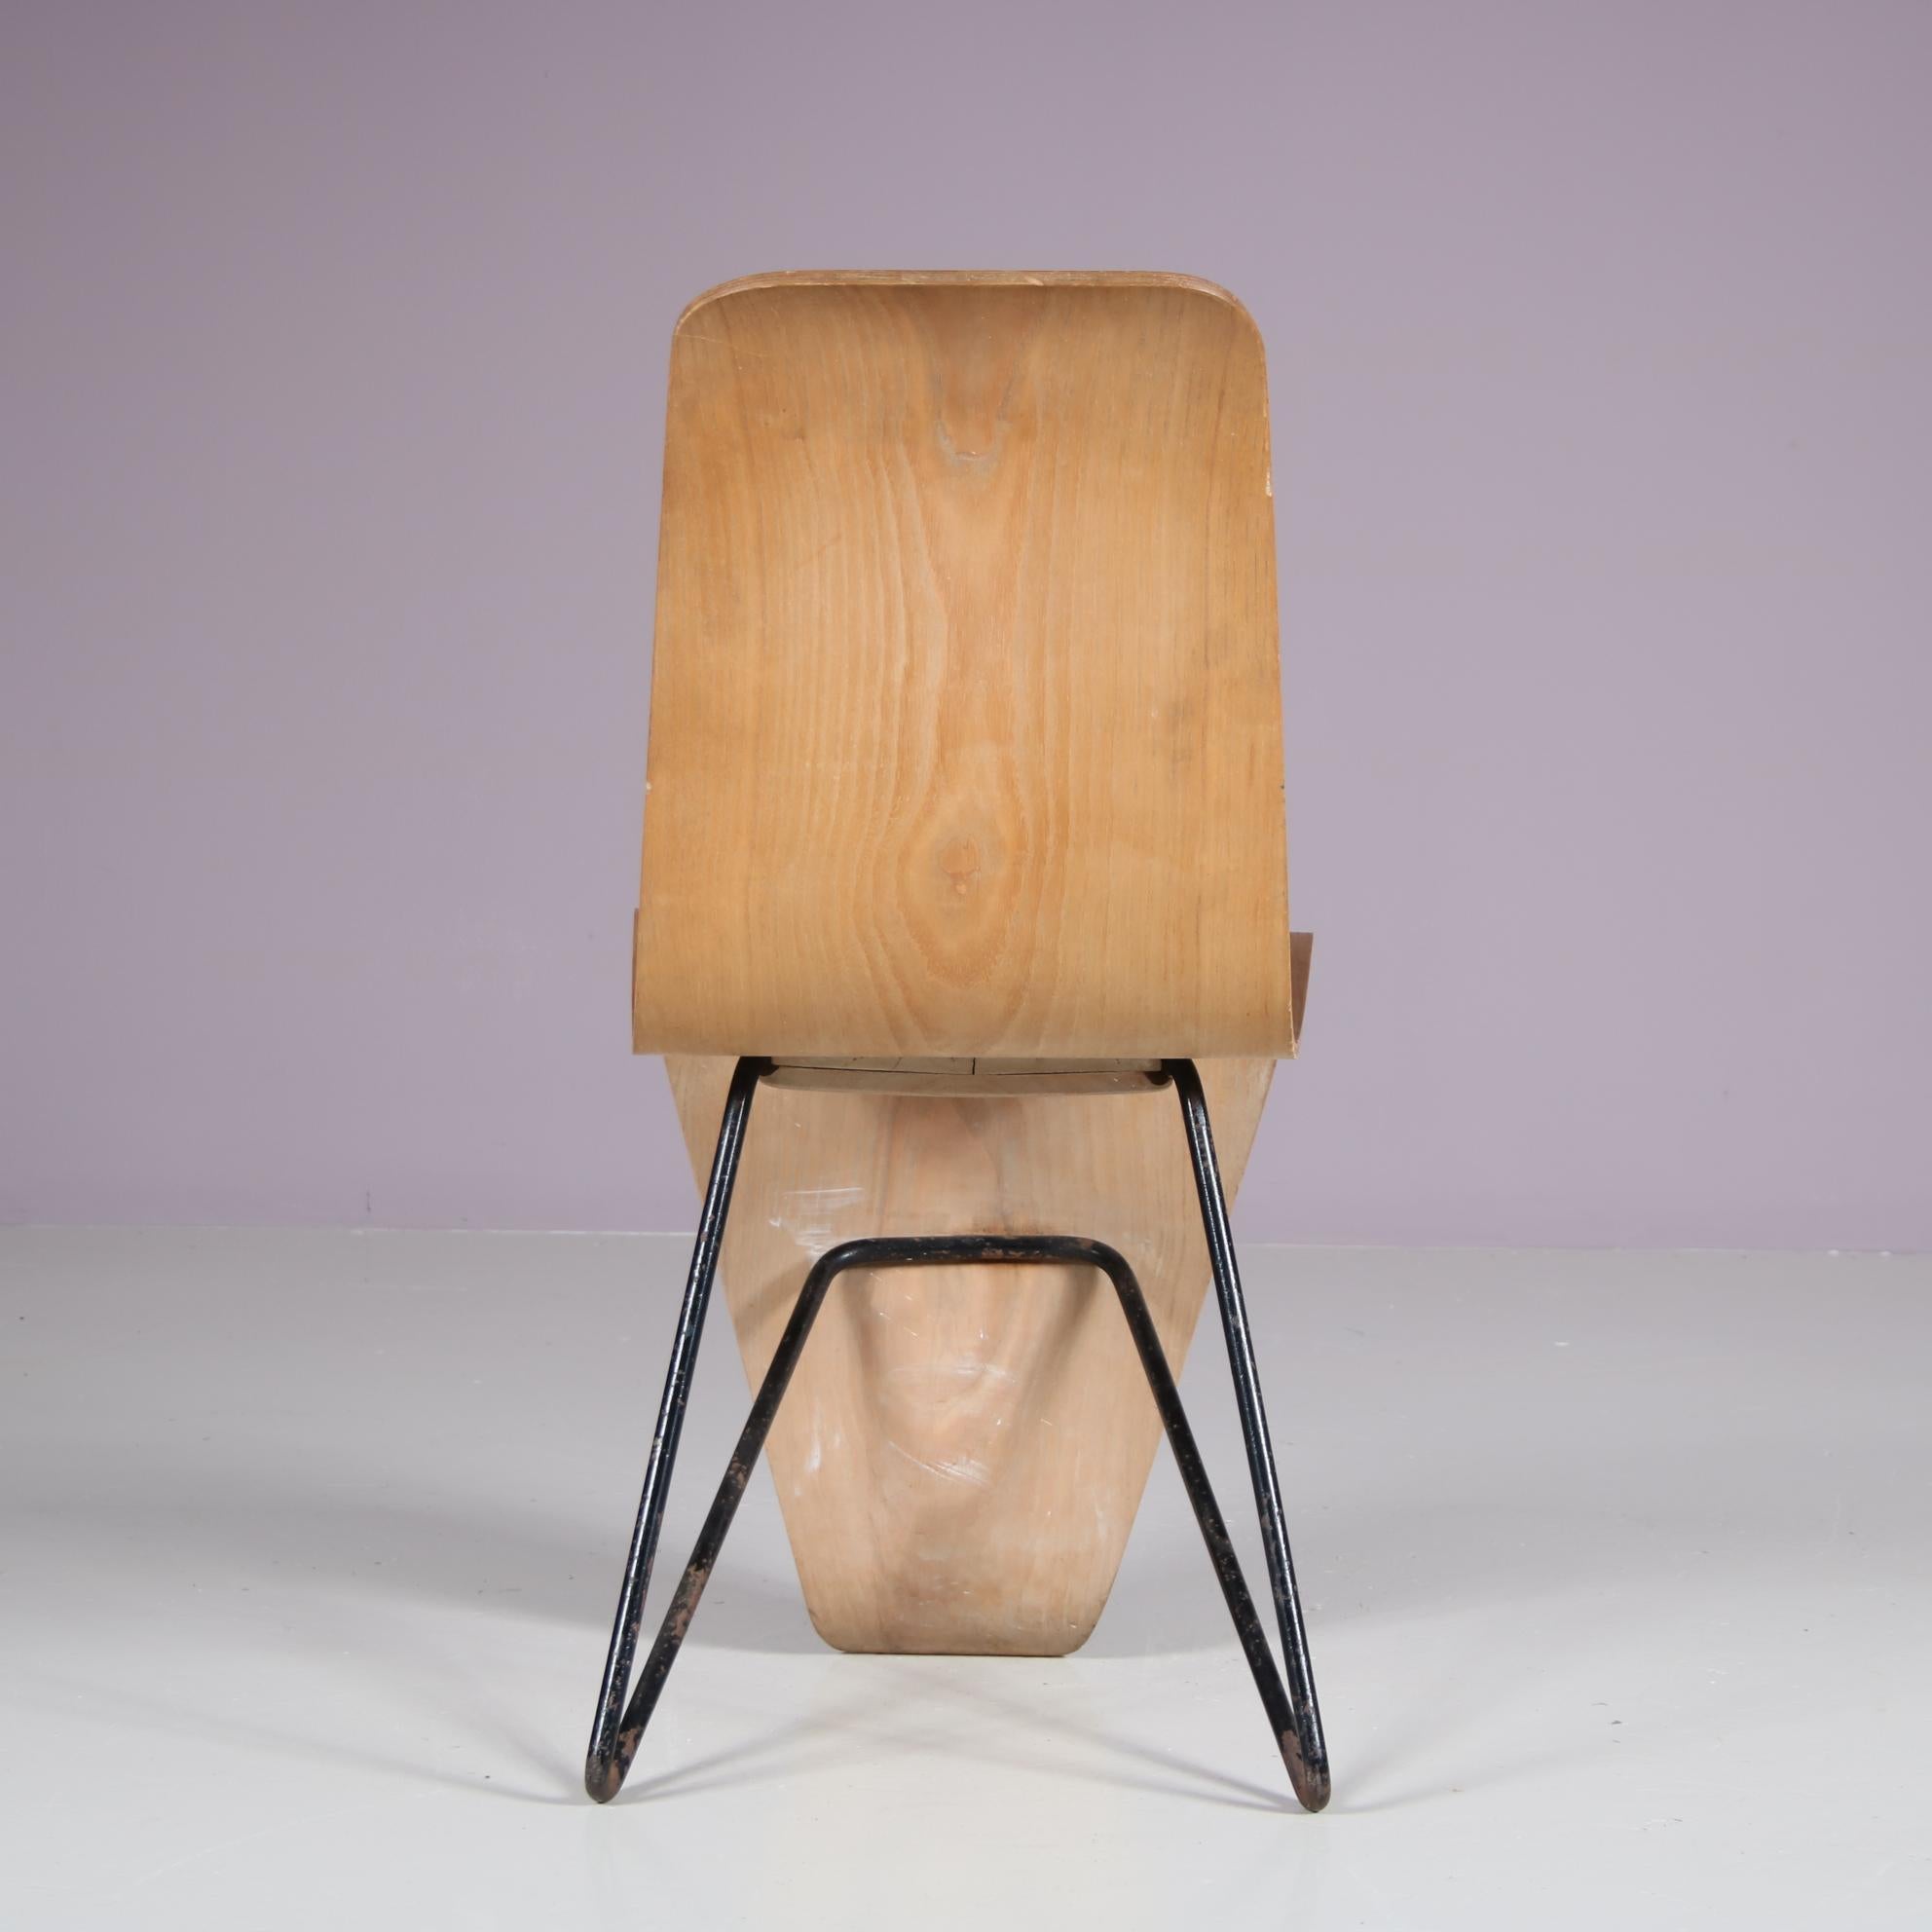 Original Bellevue Chair by André Bloc, circa 1950 For Sale 2